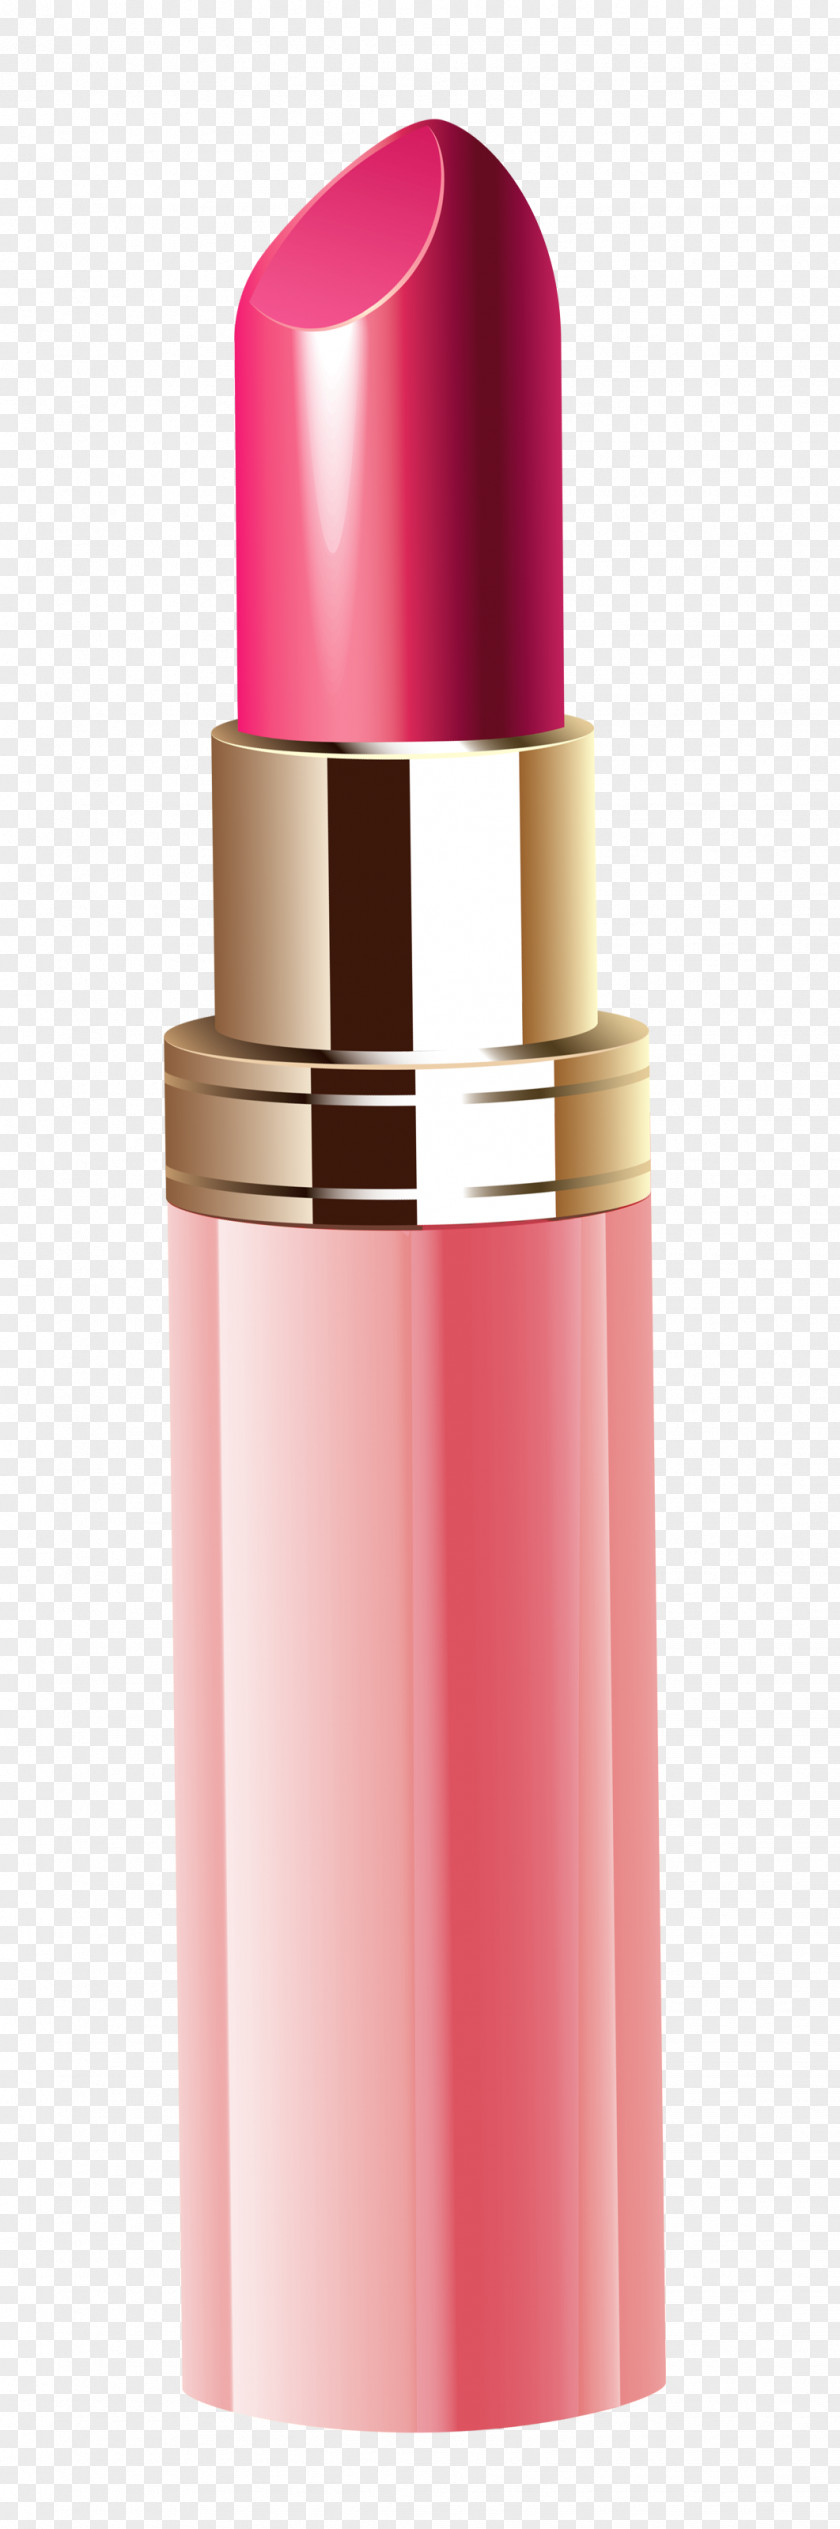 Pink Lipstick Clipart Image Cosmetics Clip Art PNG